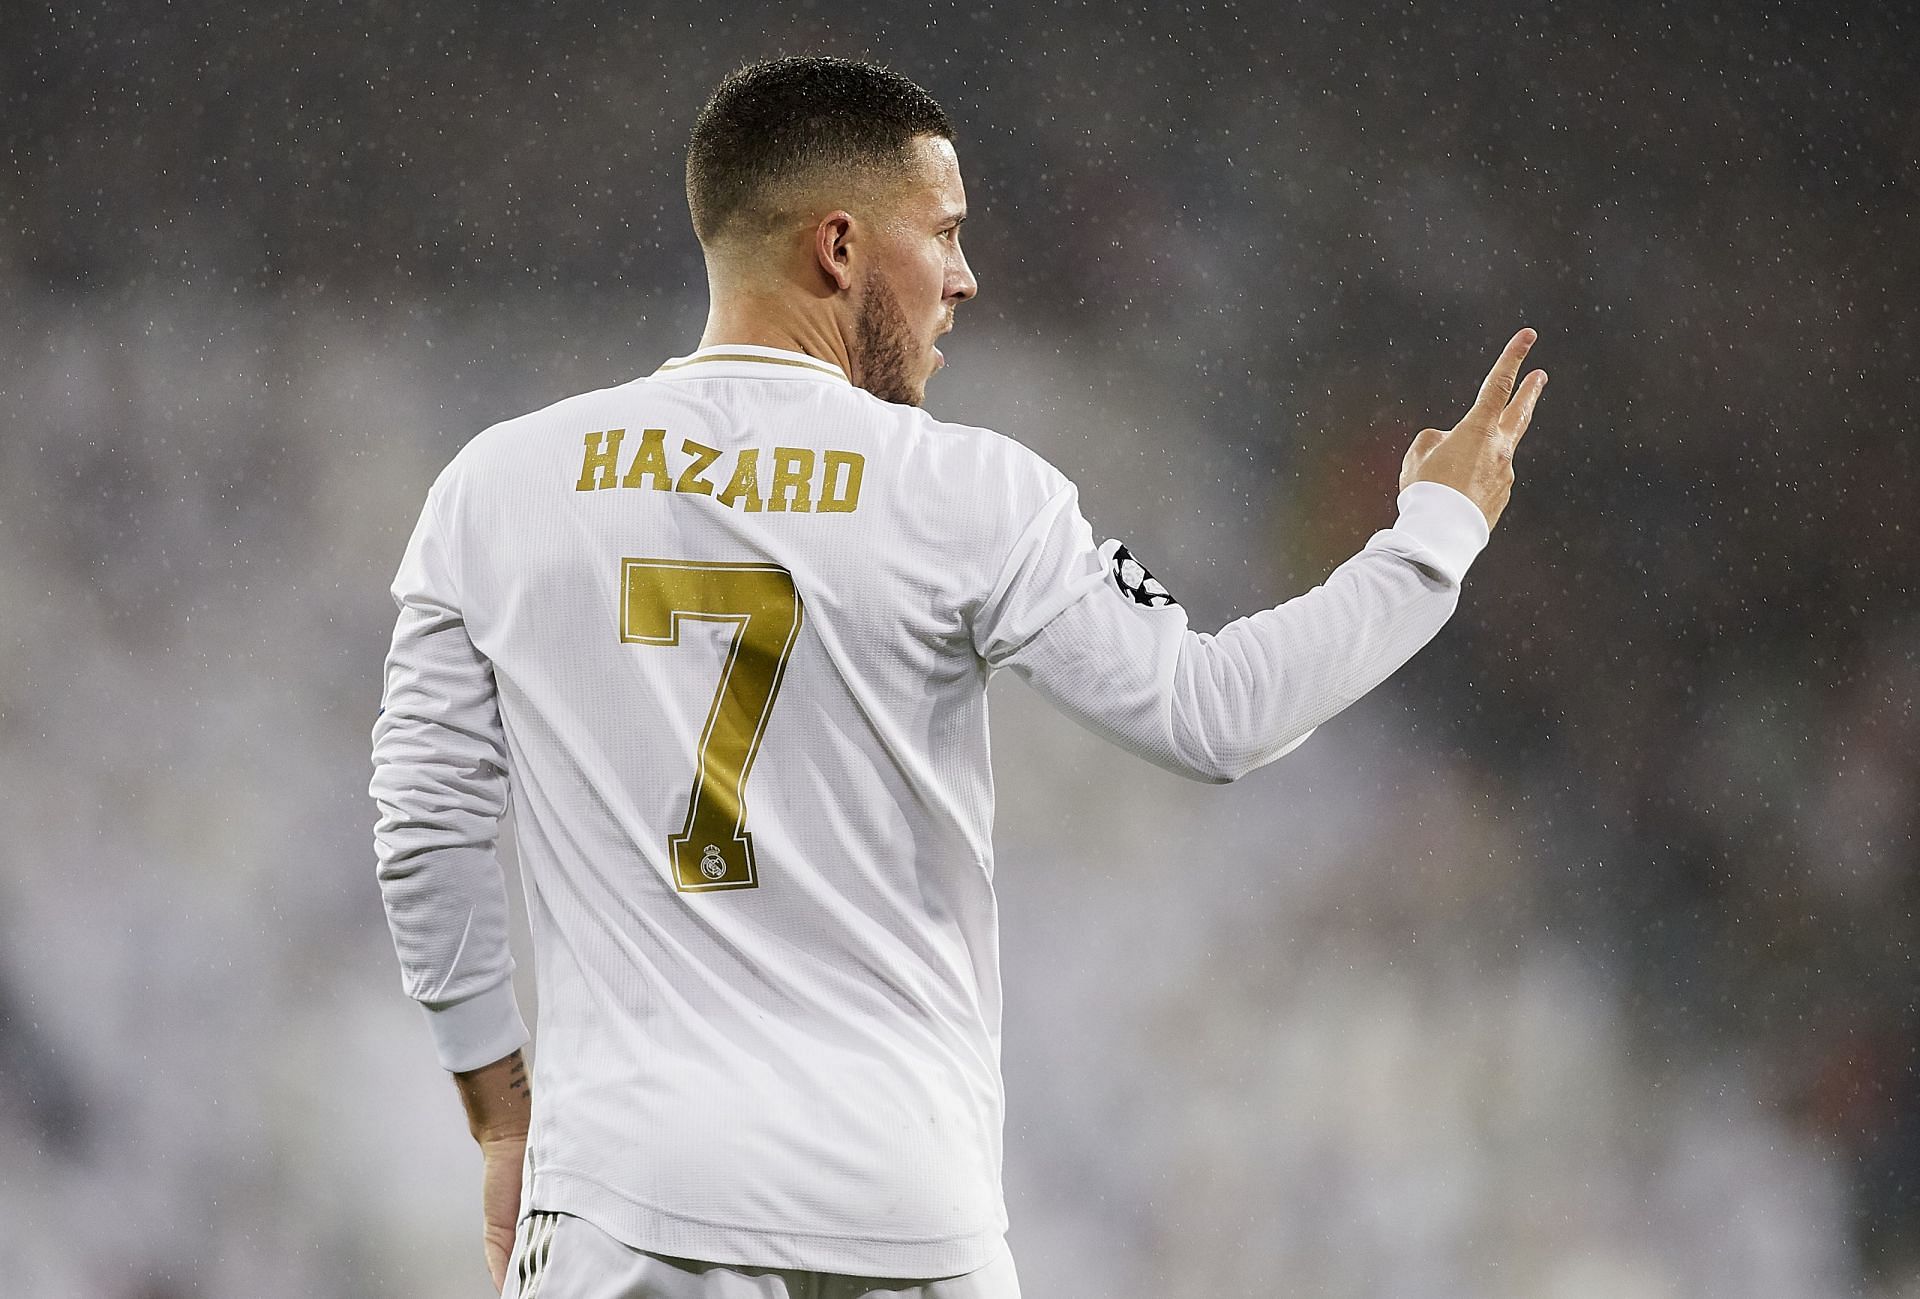 Eden Hazard has scored 4 LaLiga goals for Madrid in 3 years